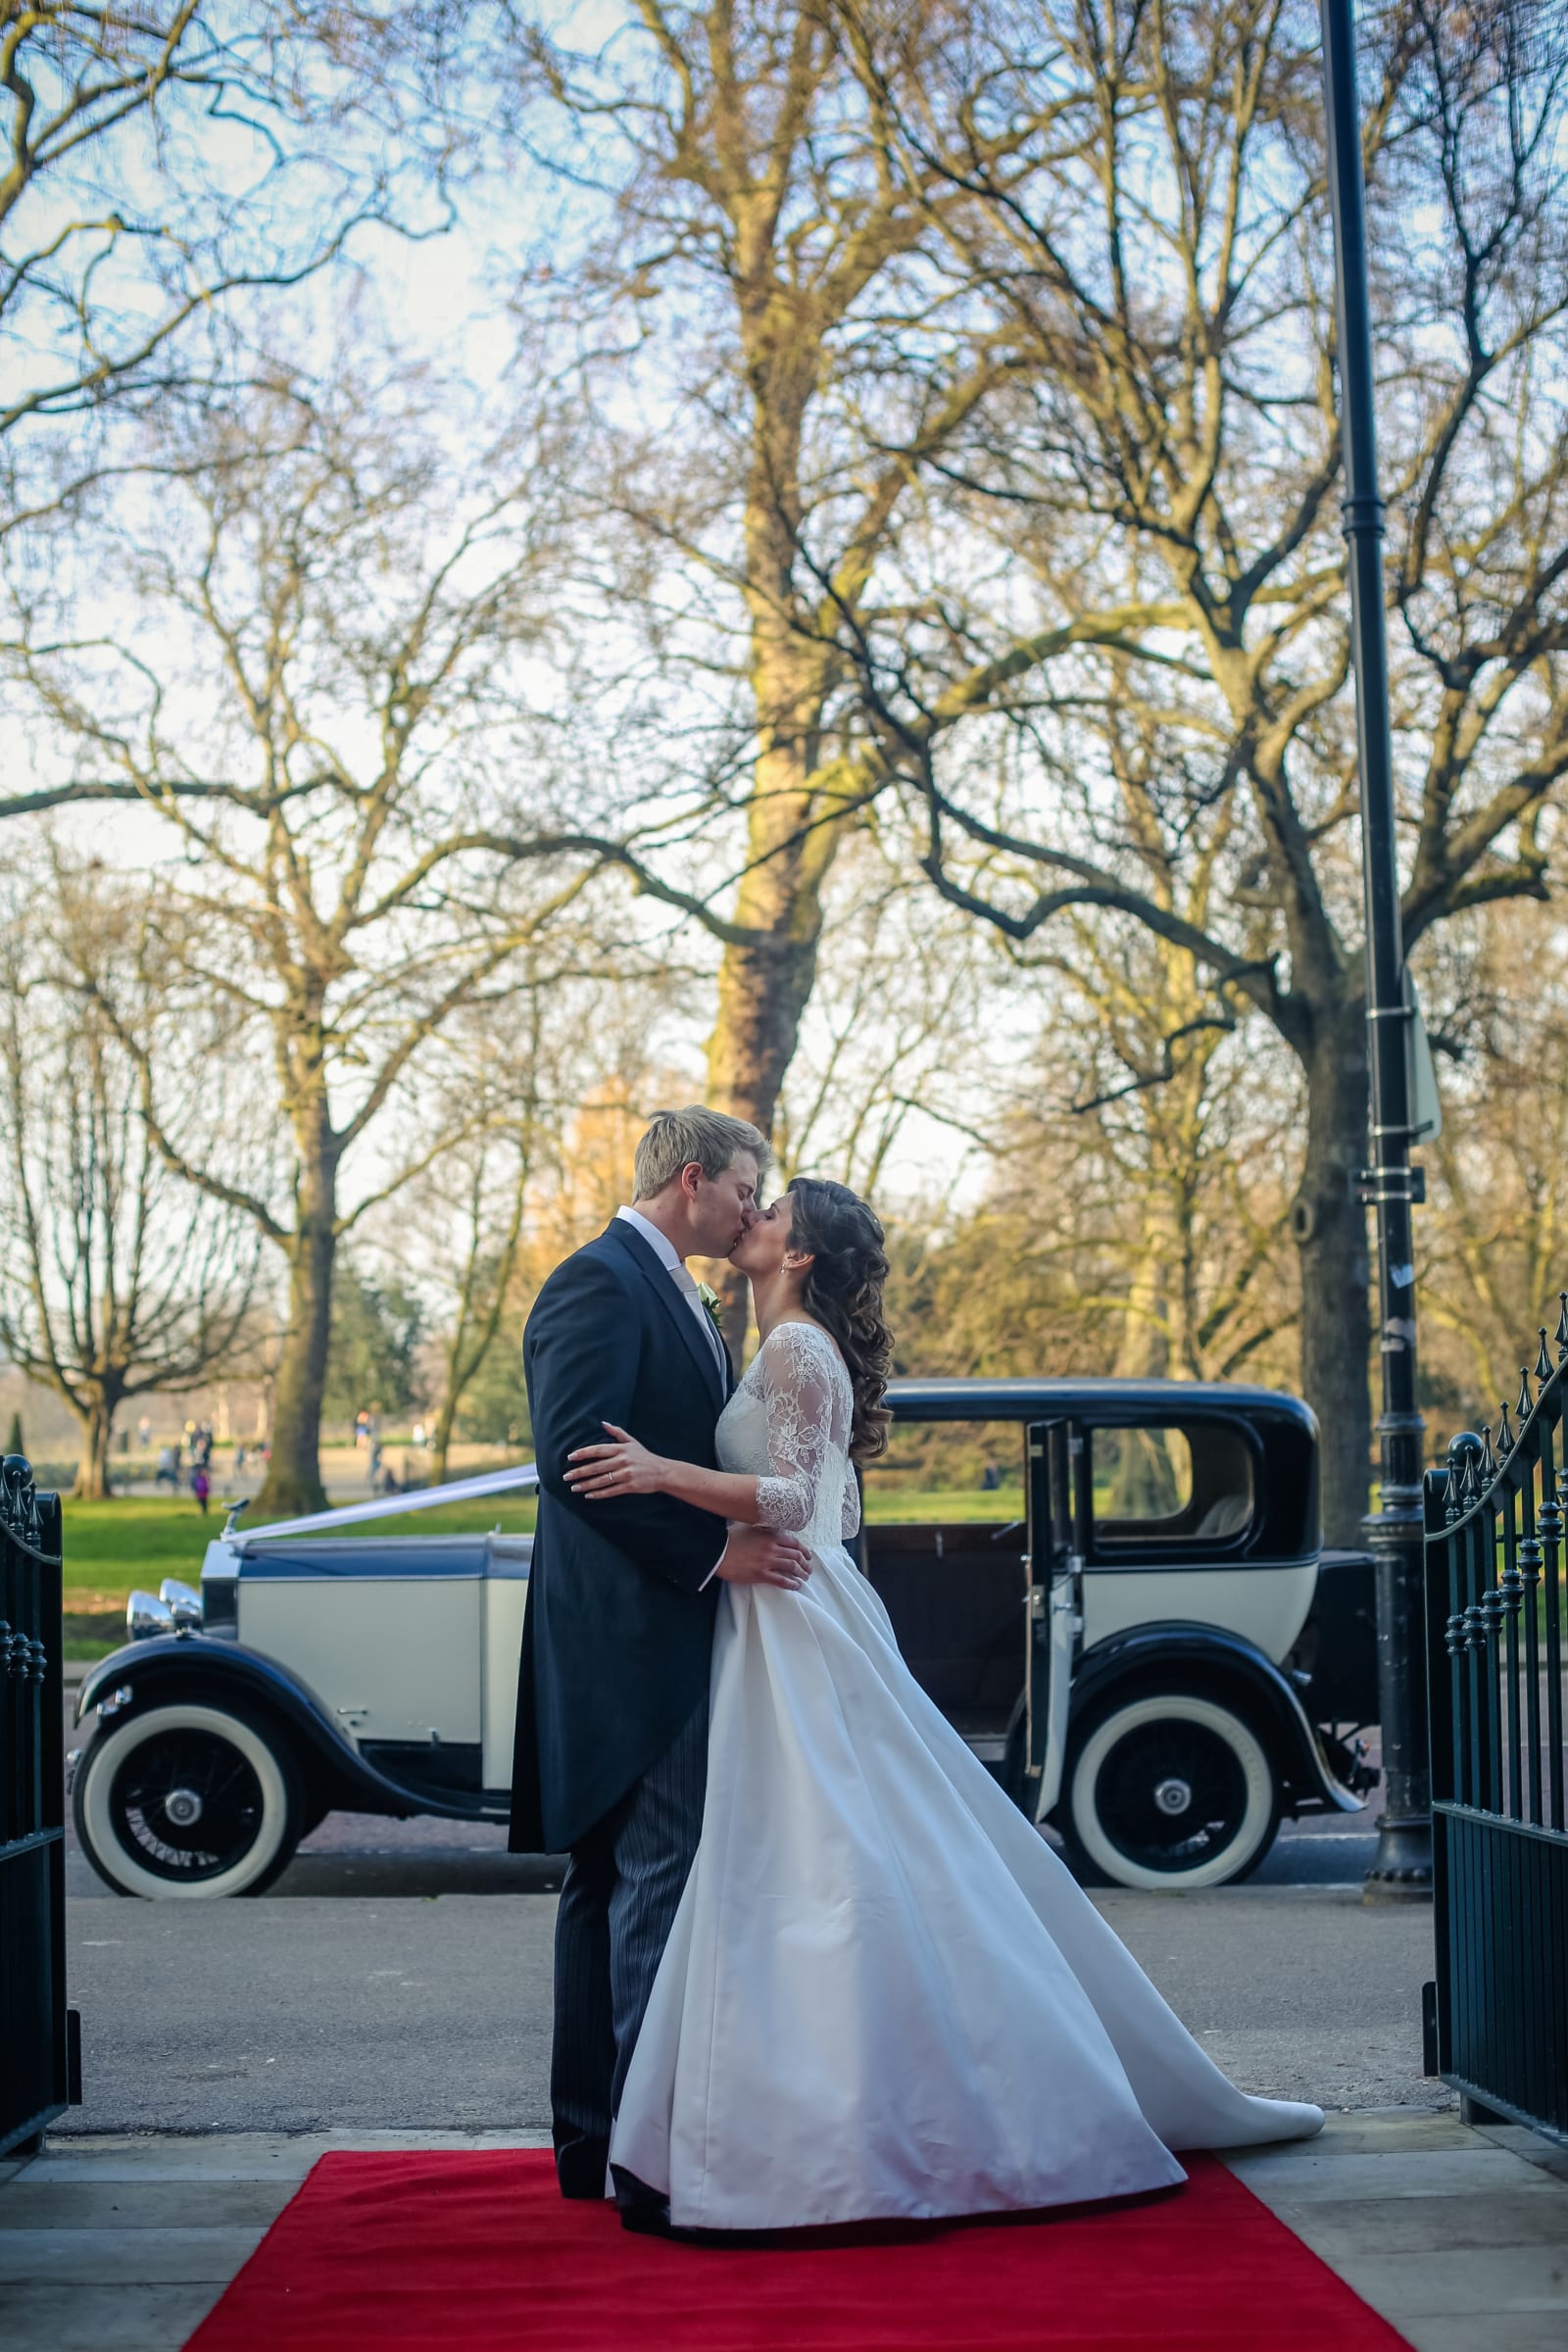 South East | Greater London | London | Autumn | Classic | Elegant | White | Gold | City Hotel | Real Wedding | Hajley Photography #Bridebook #RealWedding #WeddingIdeas Bridebook.co.uk 